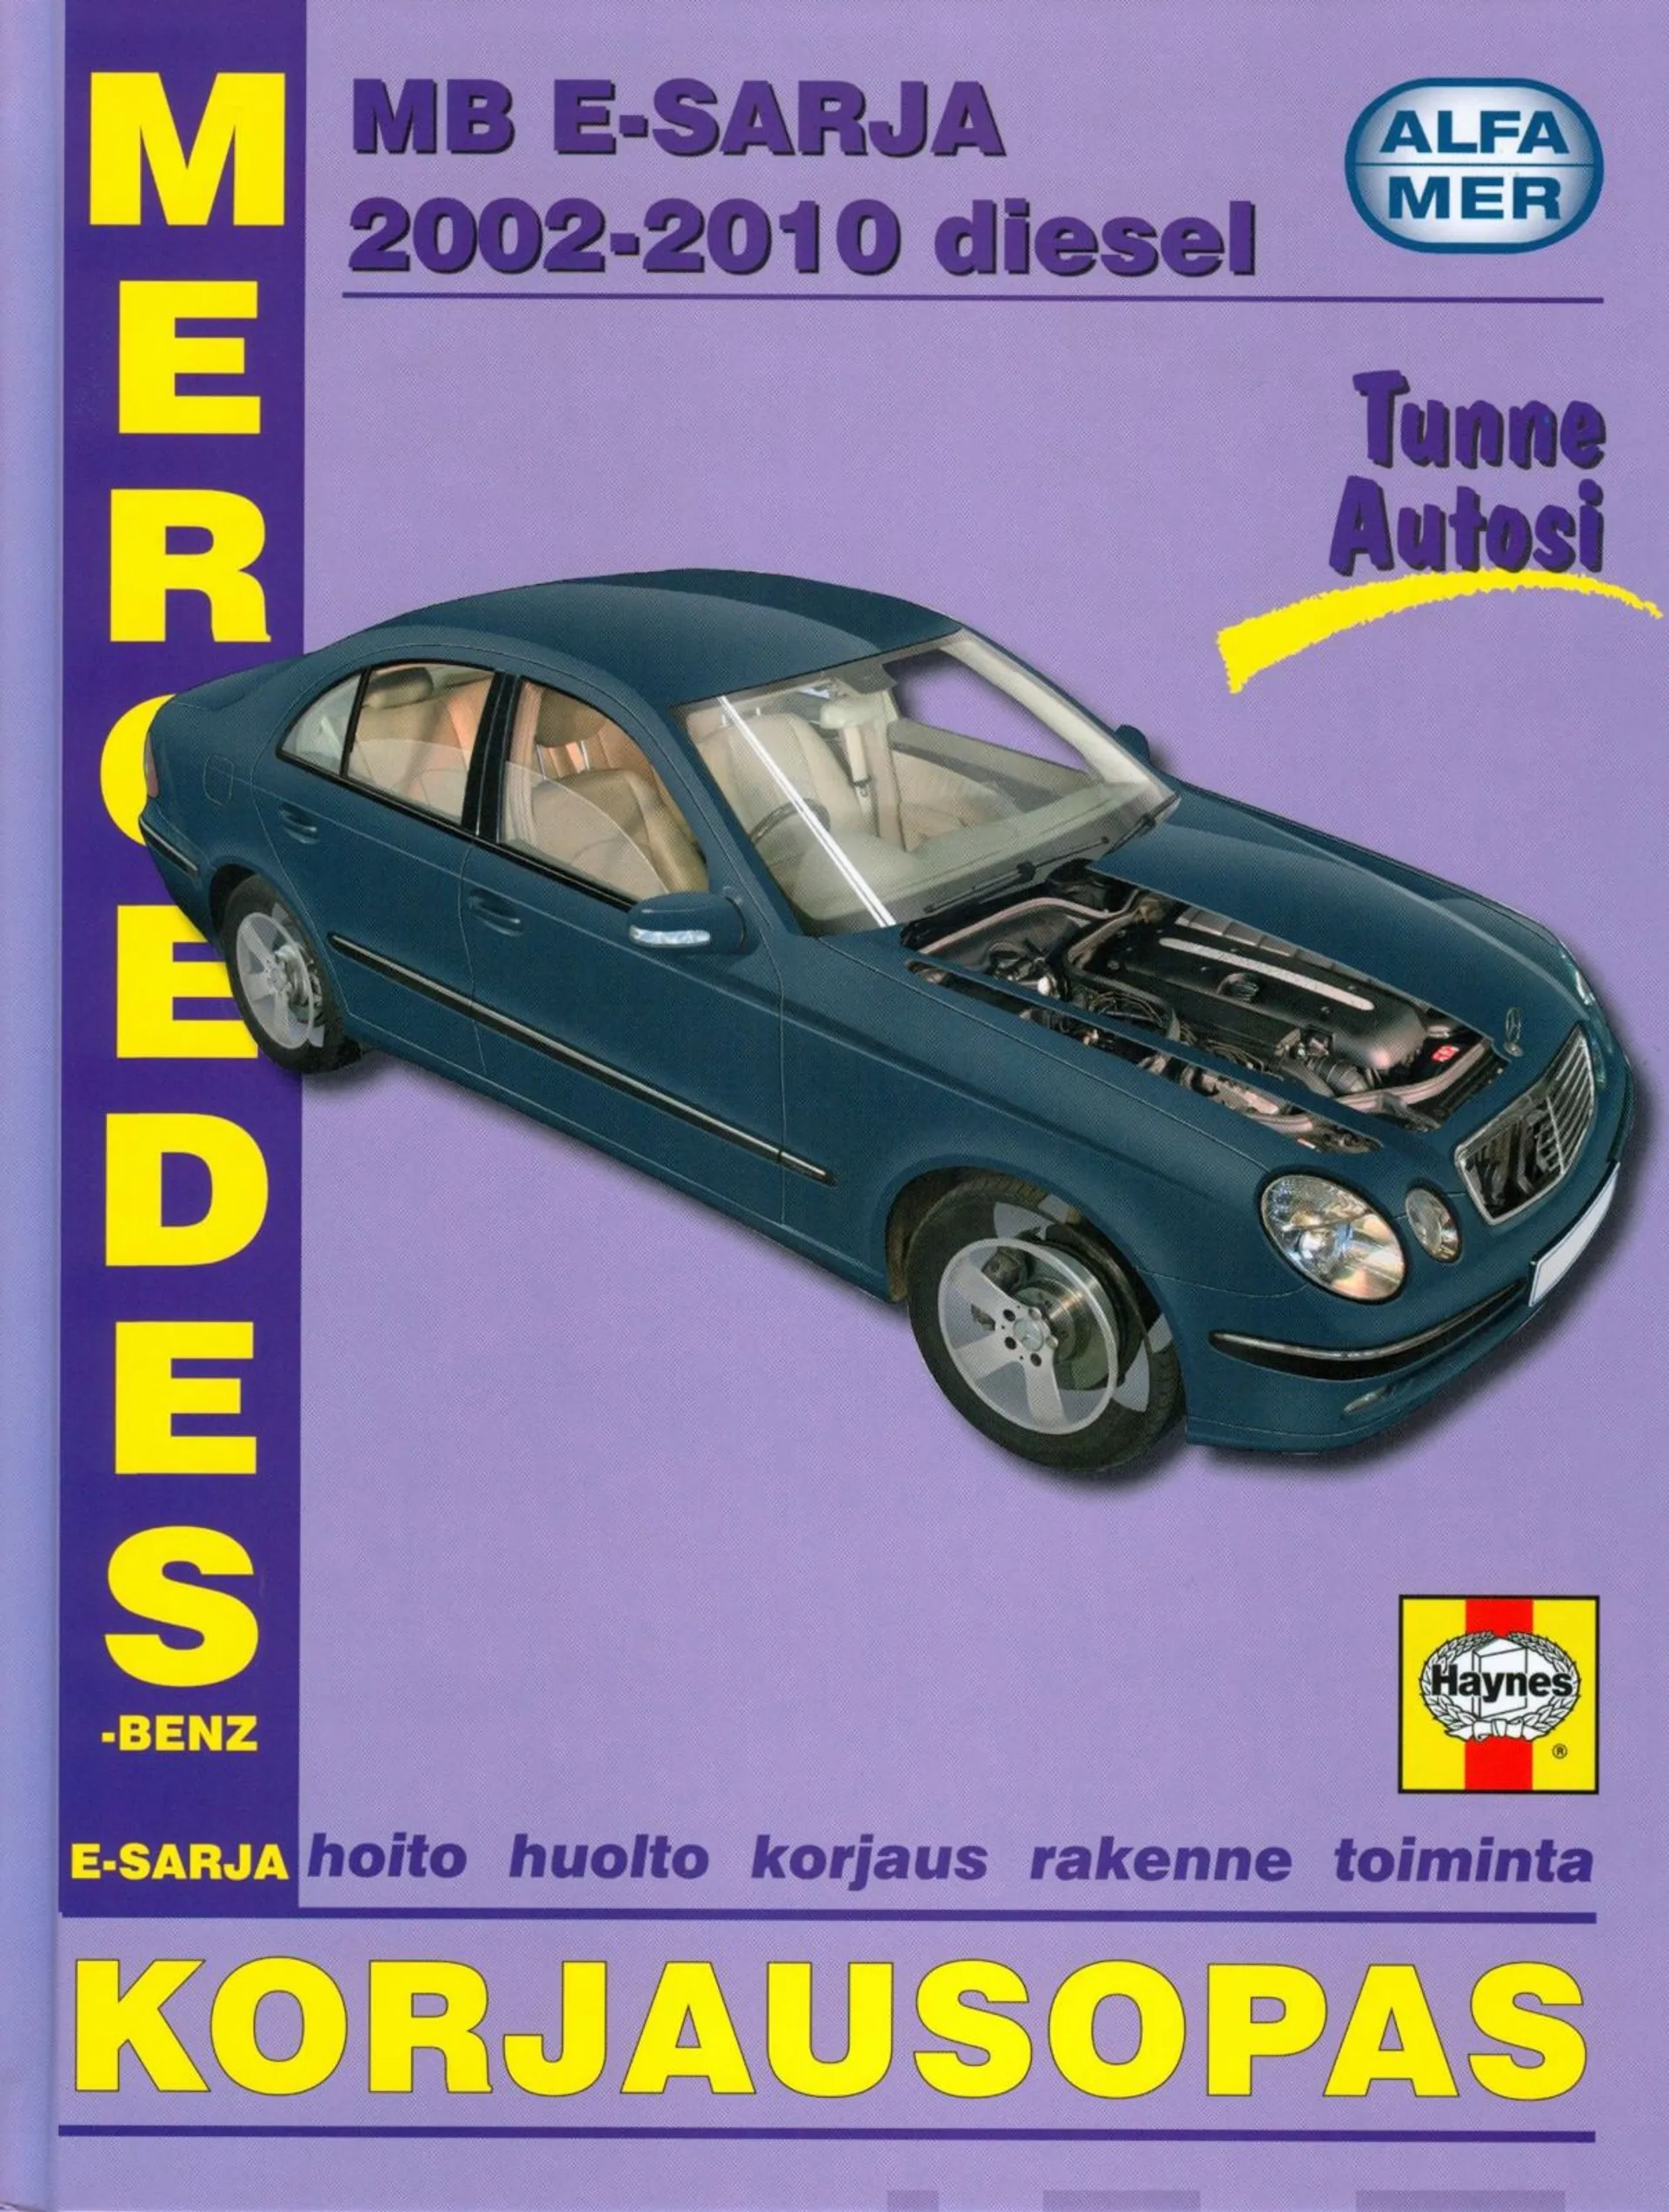 Mauno, Mercedes-Benz E-sarja diesel 2002-2010 - Korjausopas